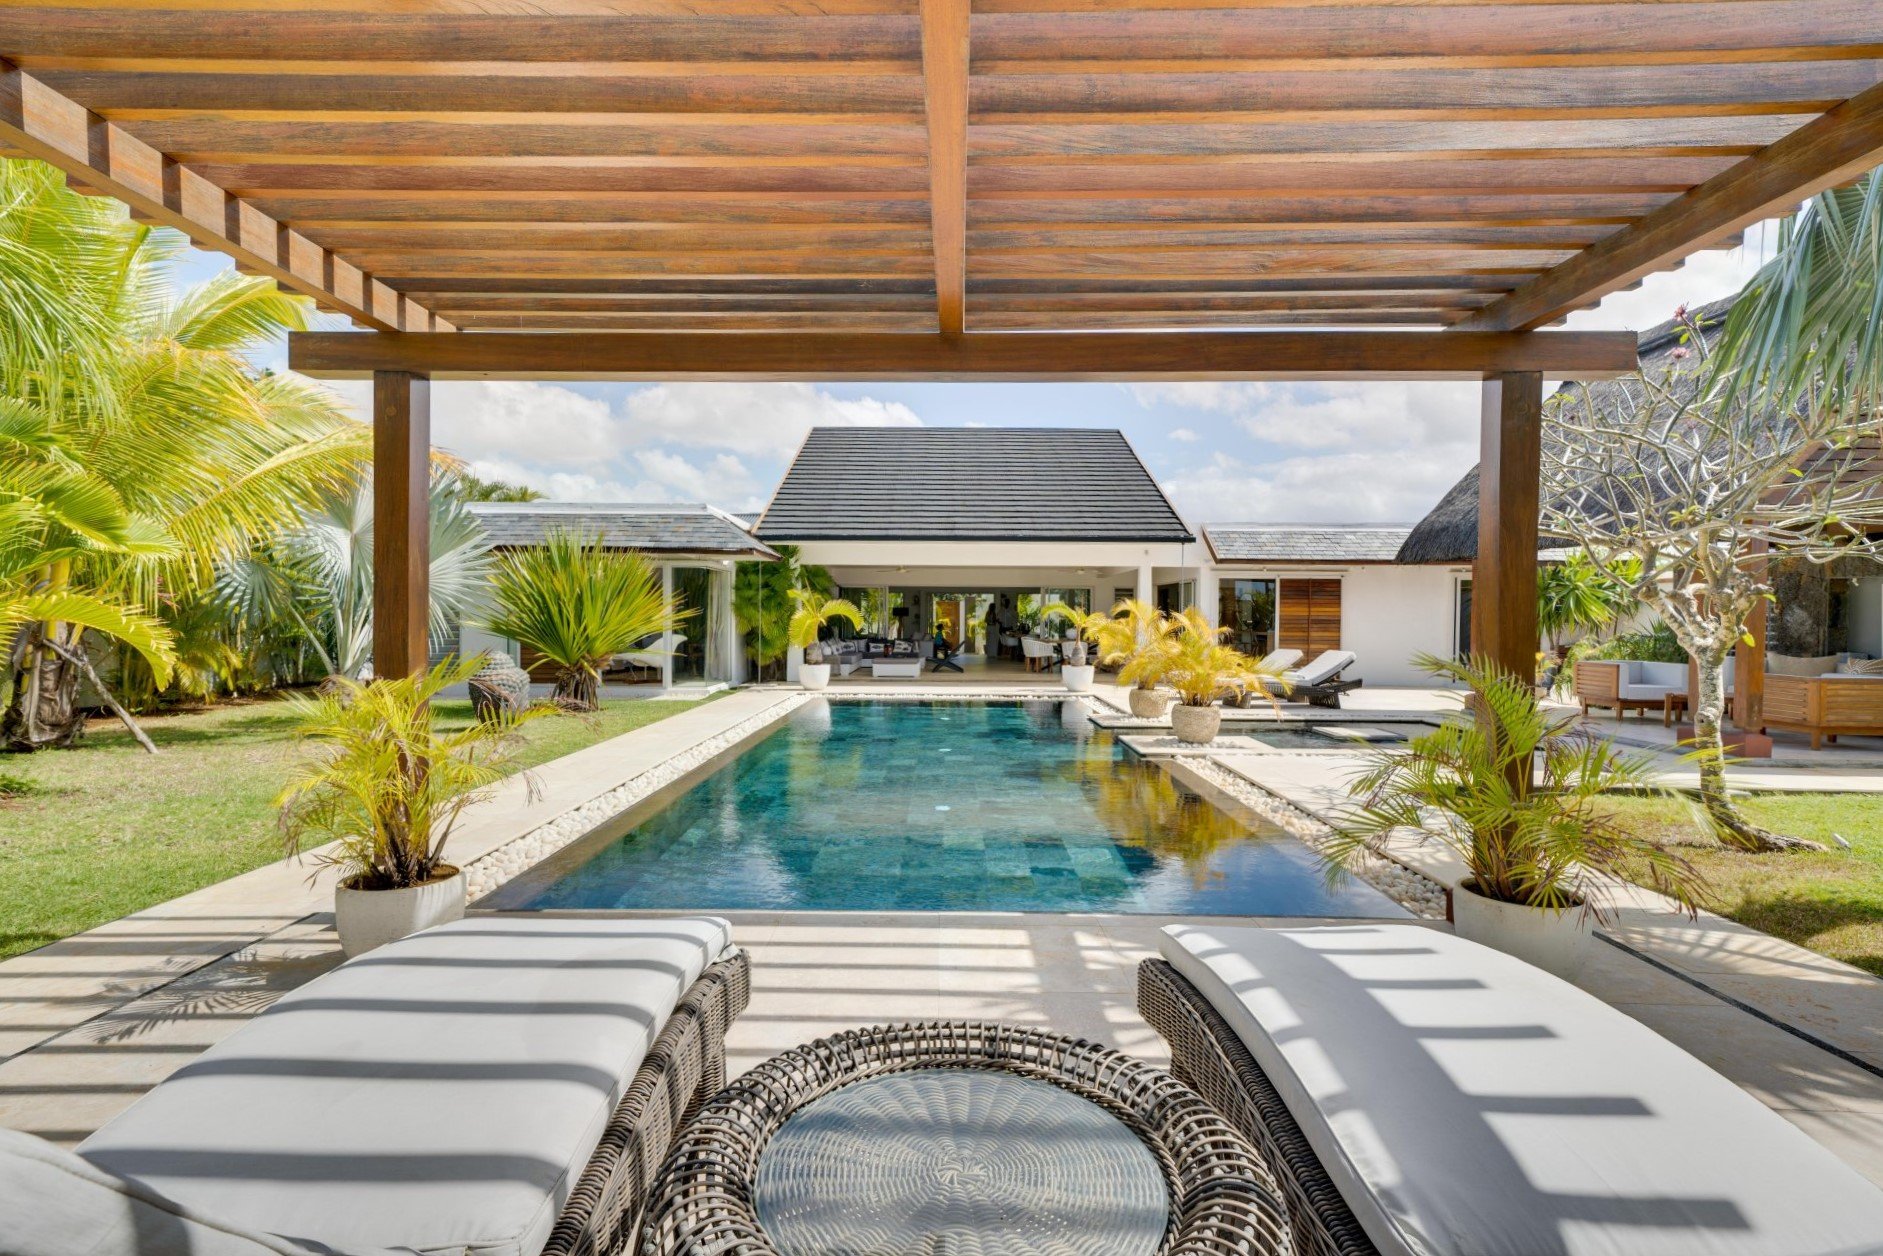 Why choose a villa in Mauritius?